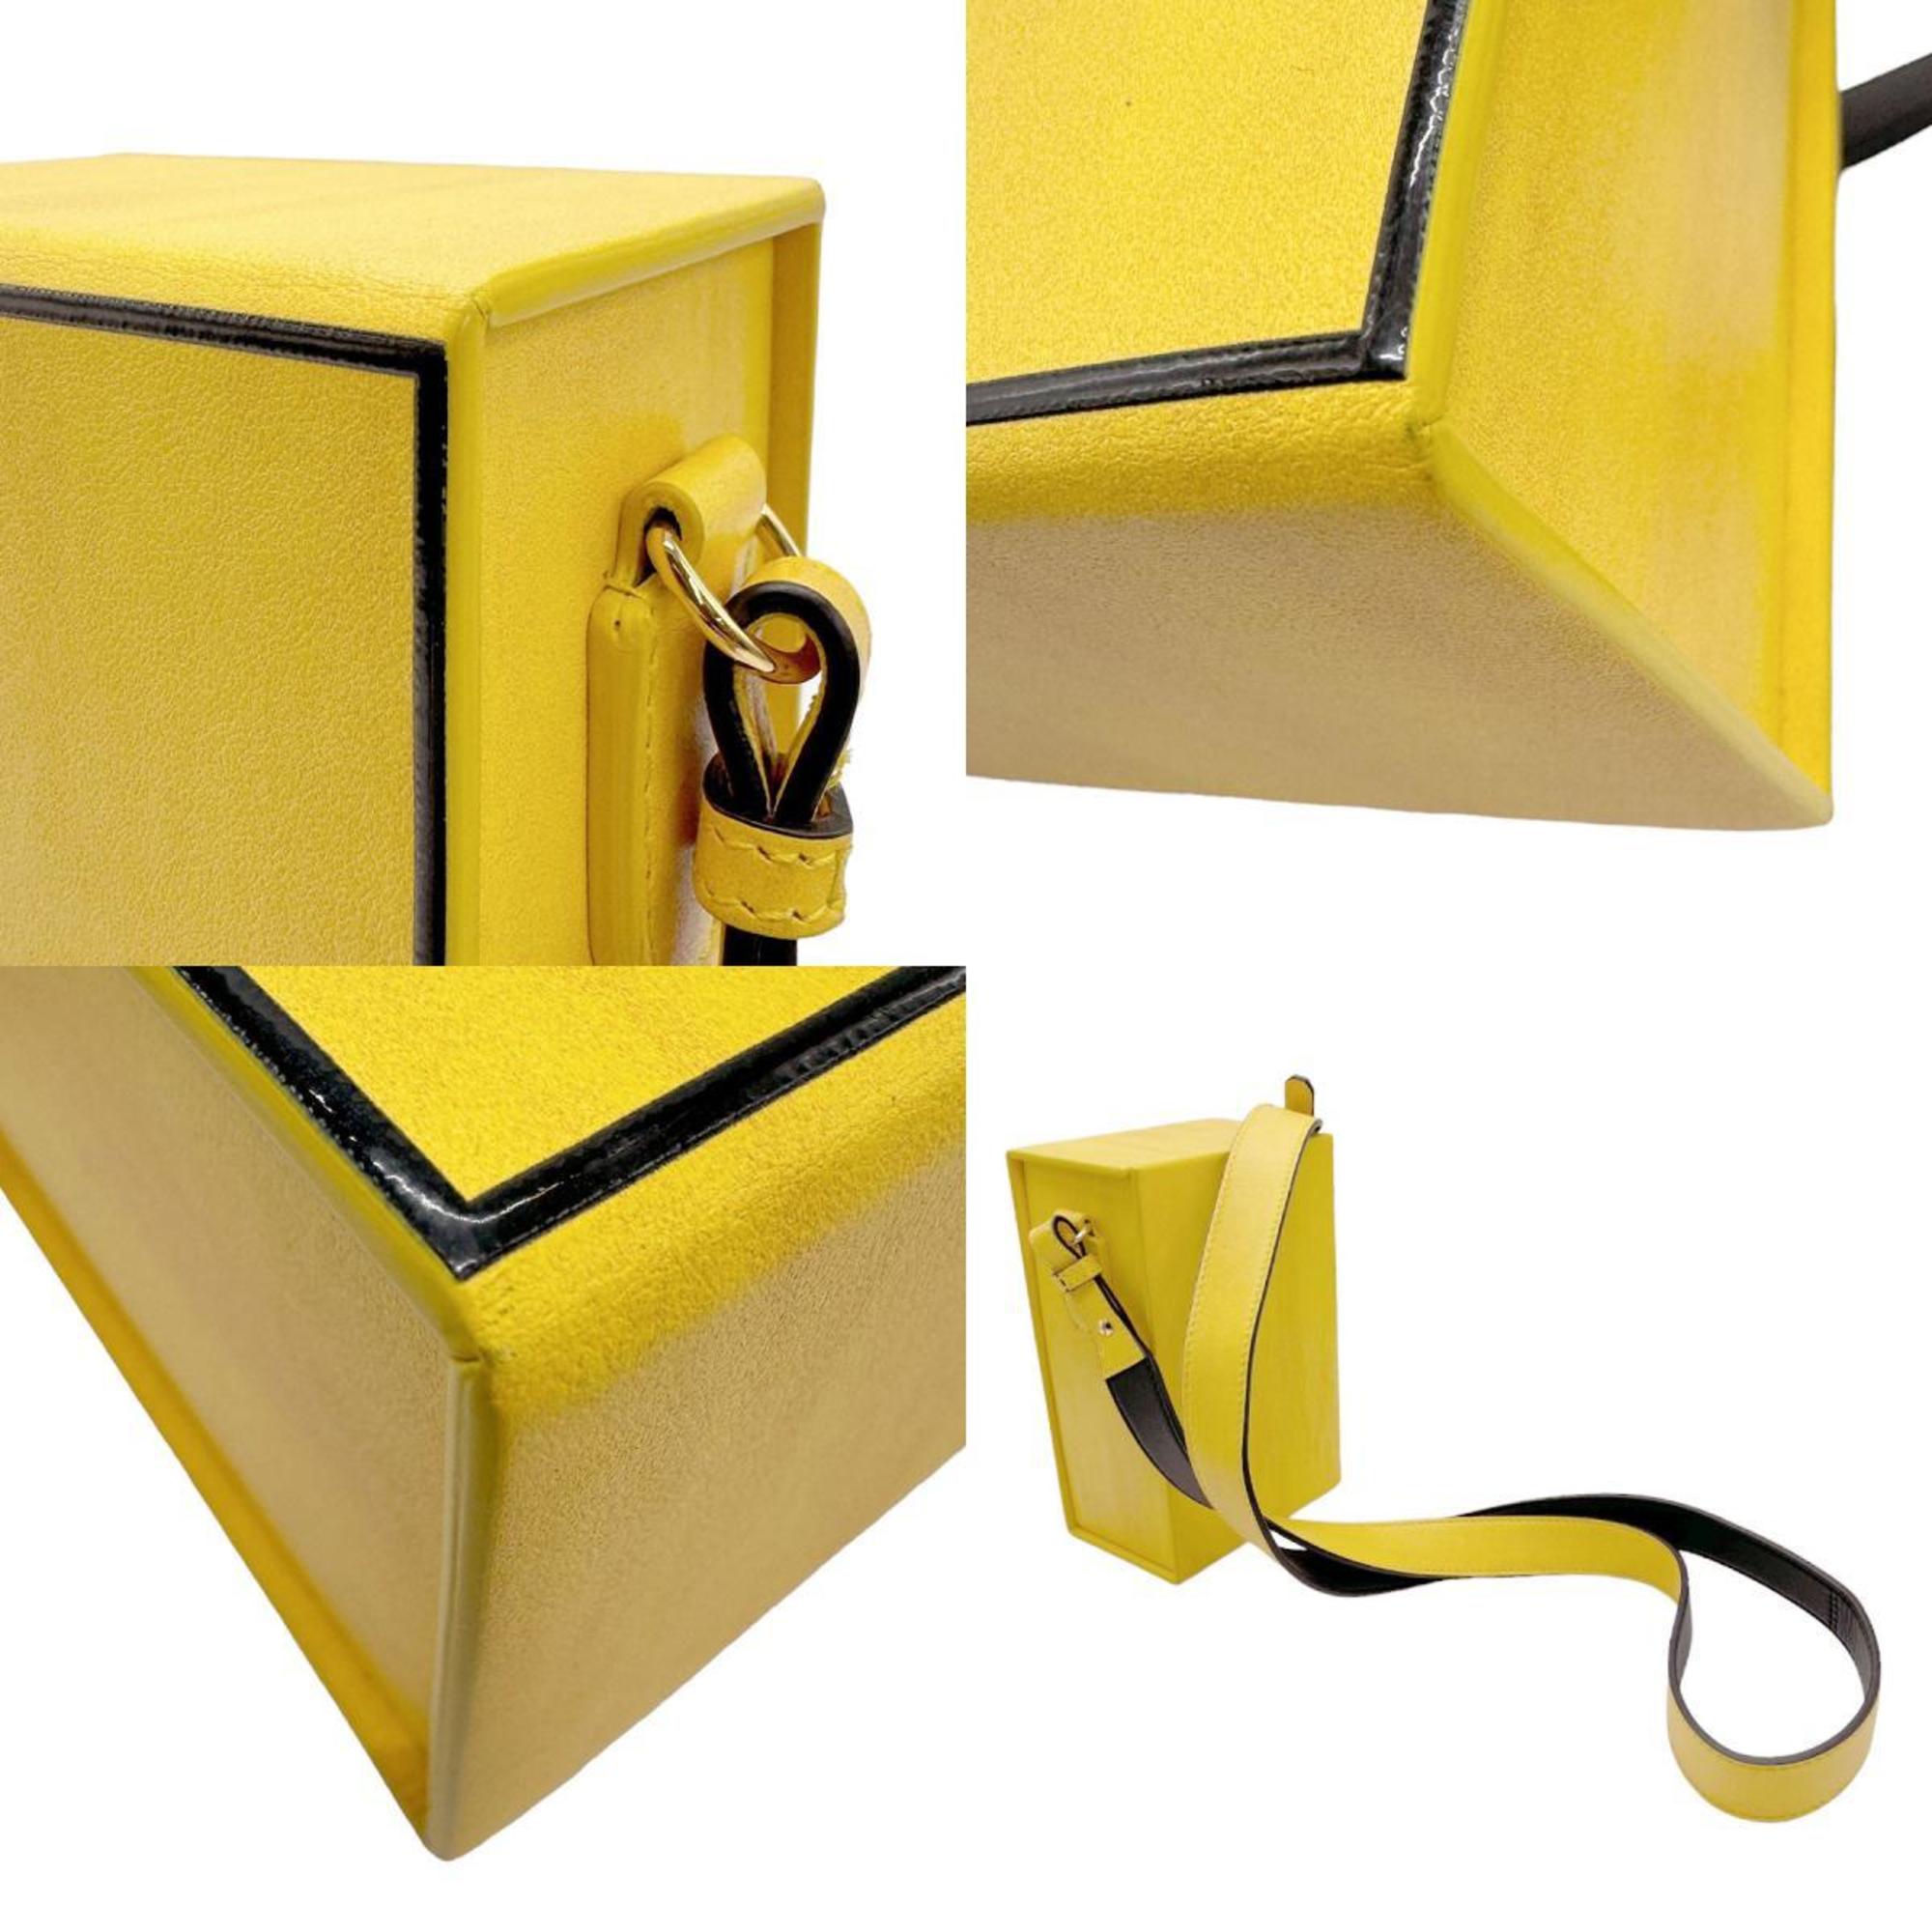 FENDI Shoulder Bag Box Leather Yellow Gold Men's z0816